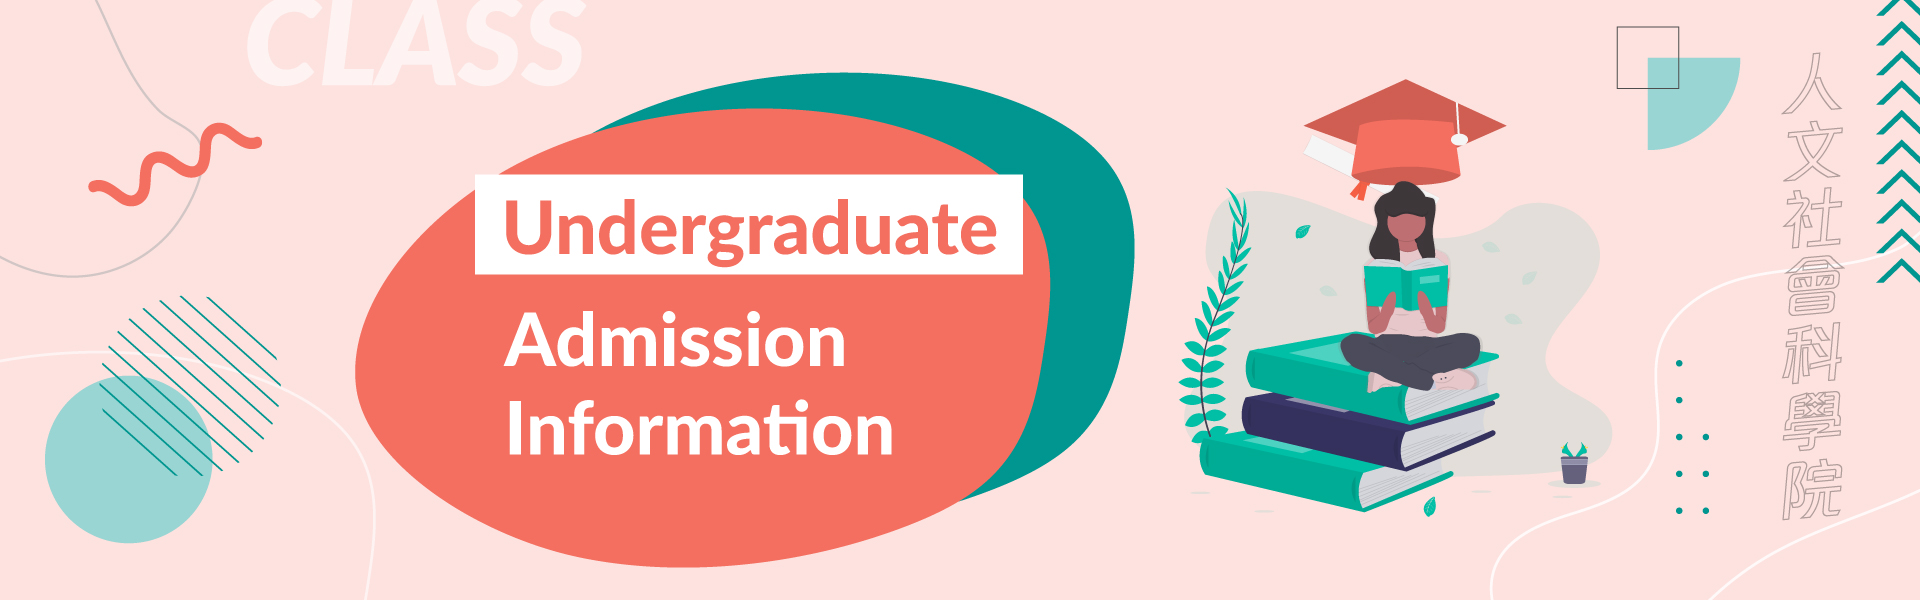 Undergraduate Admission Information